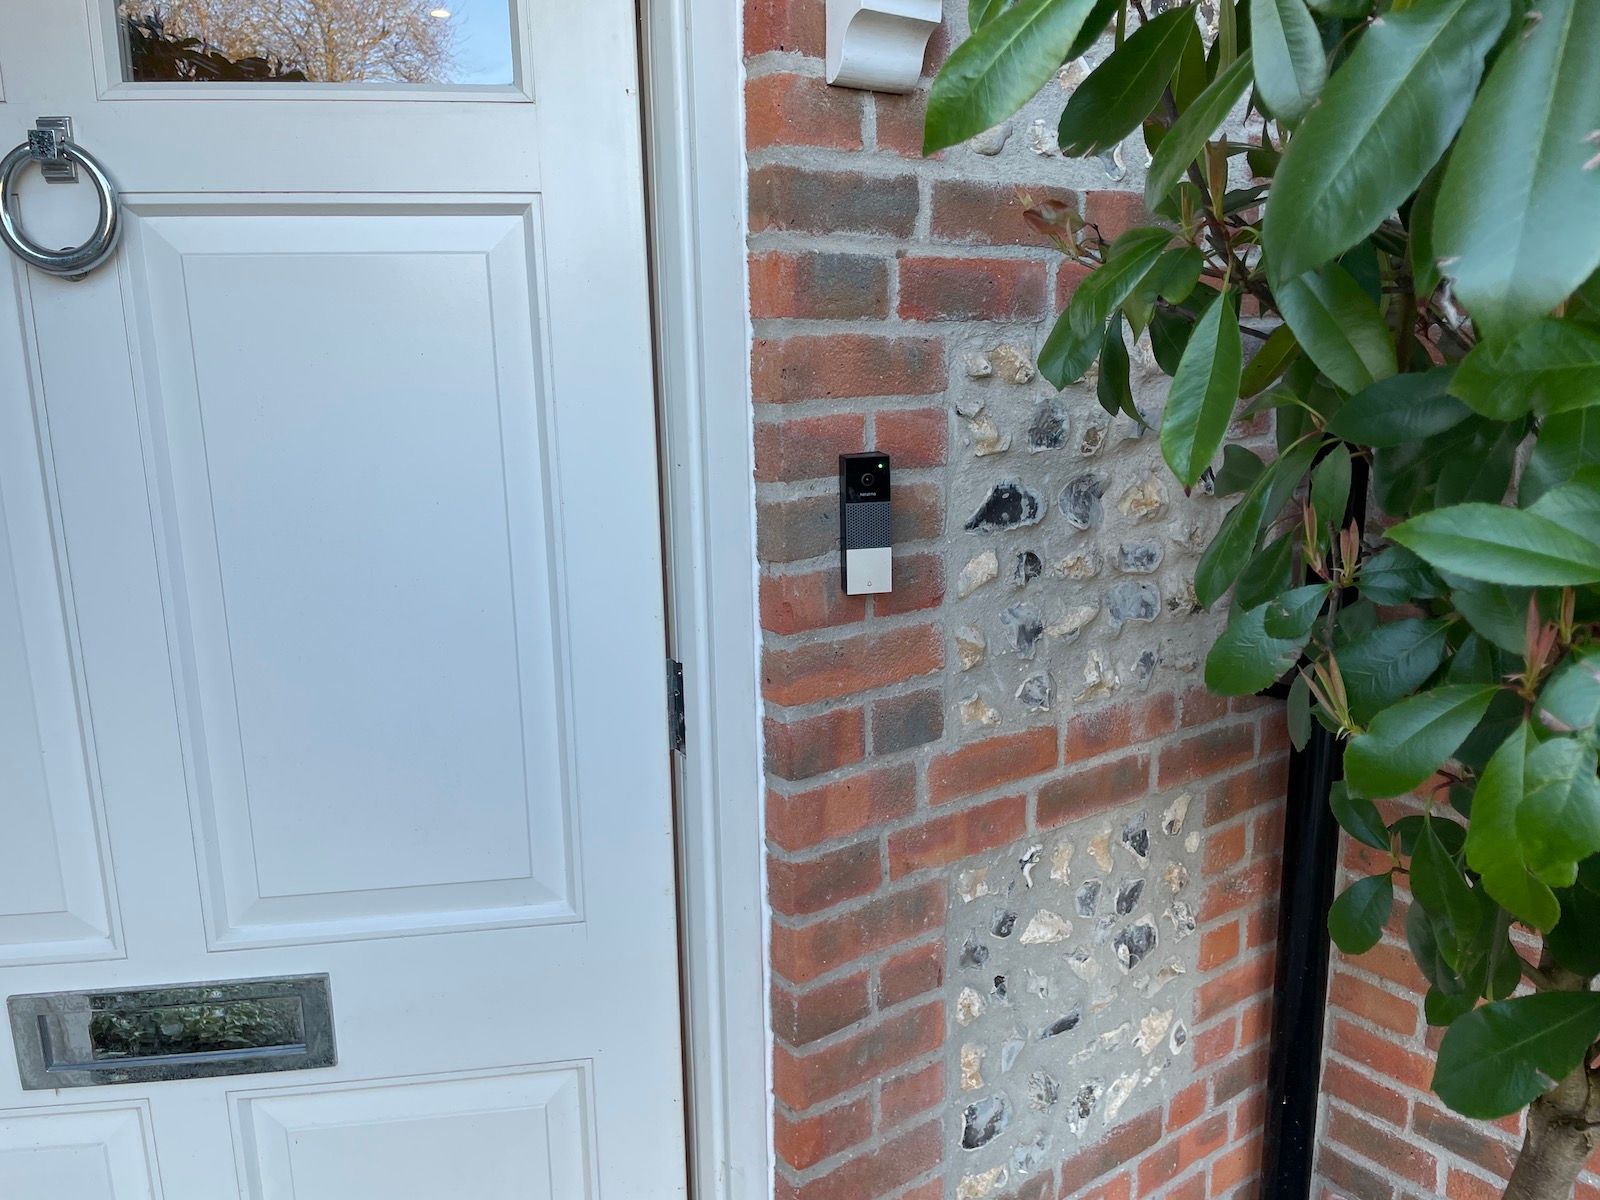 Installing a smart doorbell